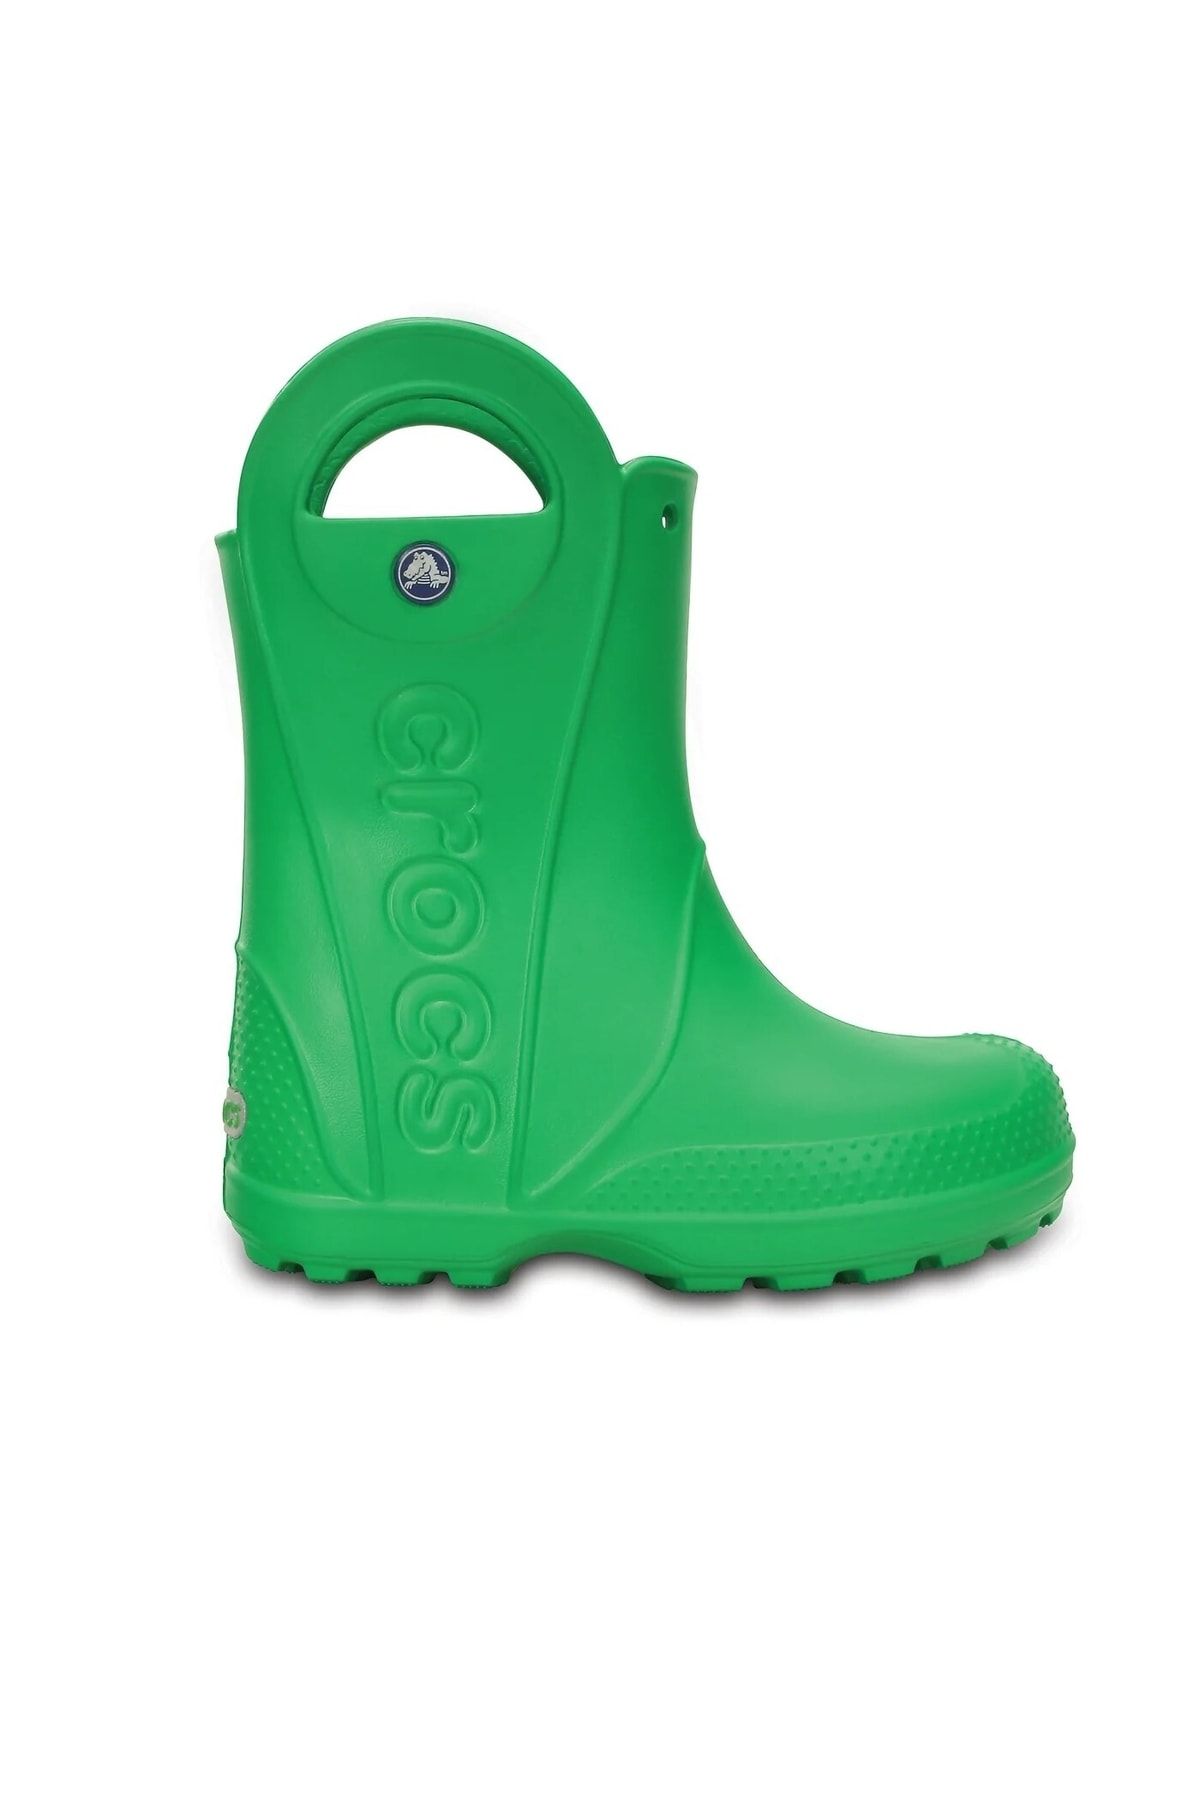 Crocs Crocs Handle It Rain Boot Kids 12803-3e8